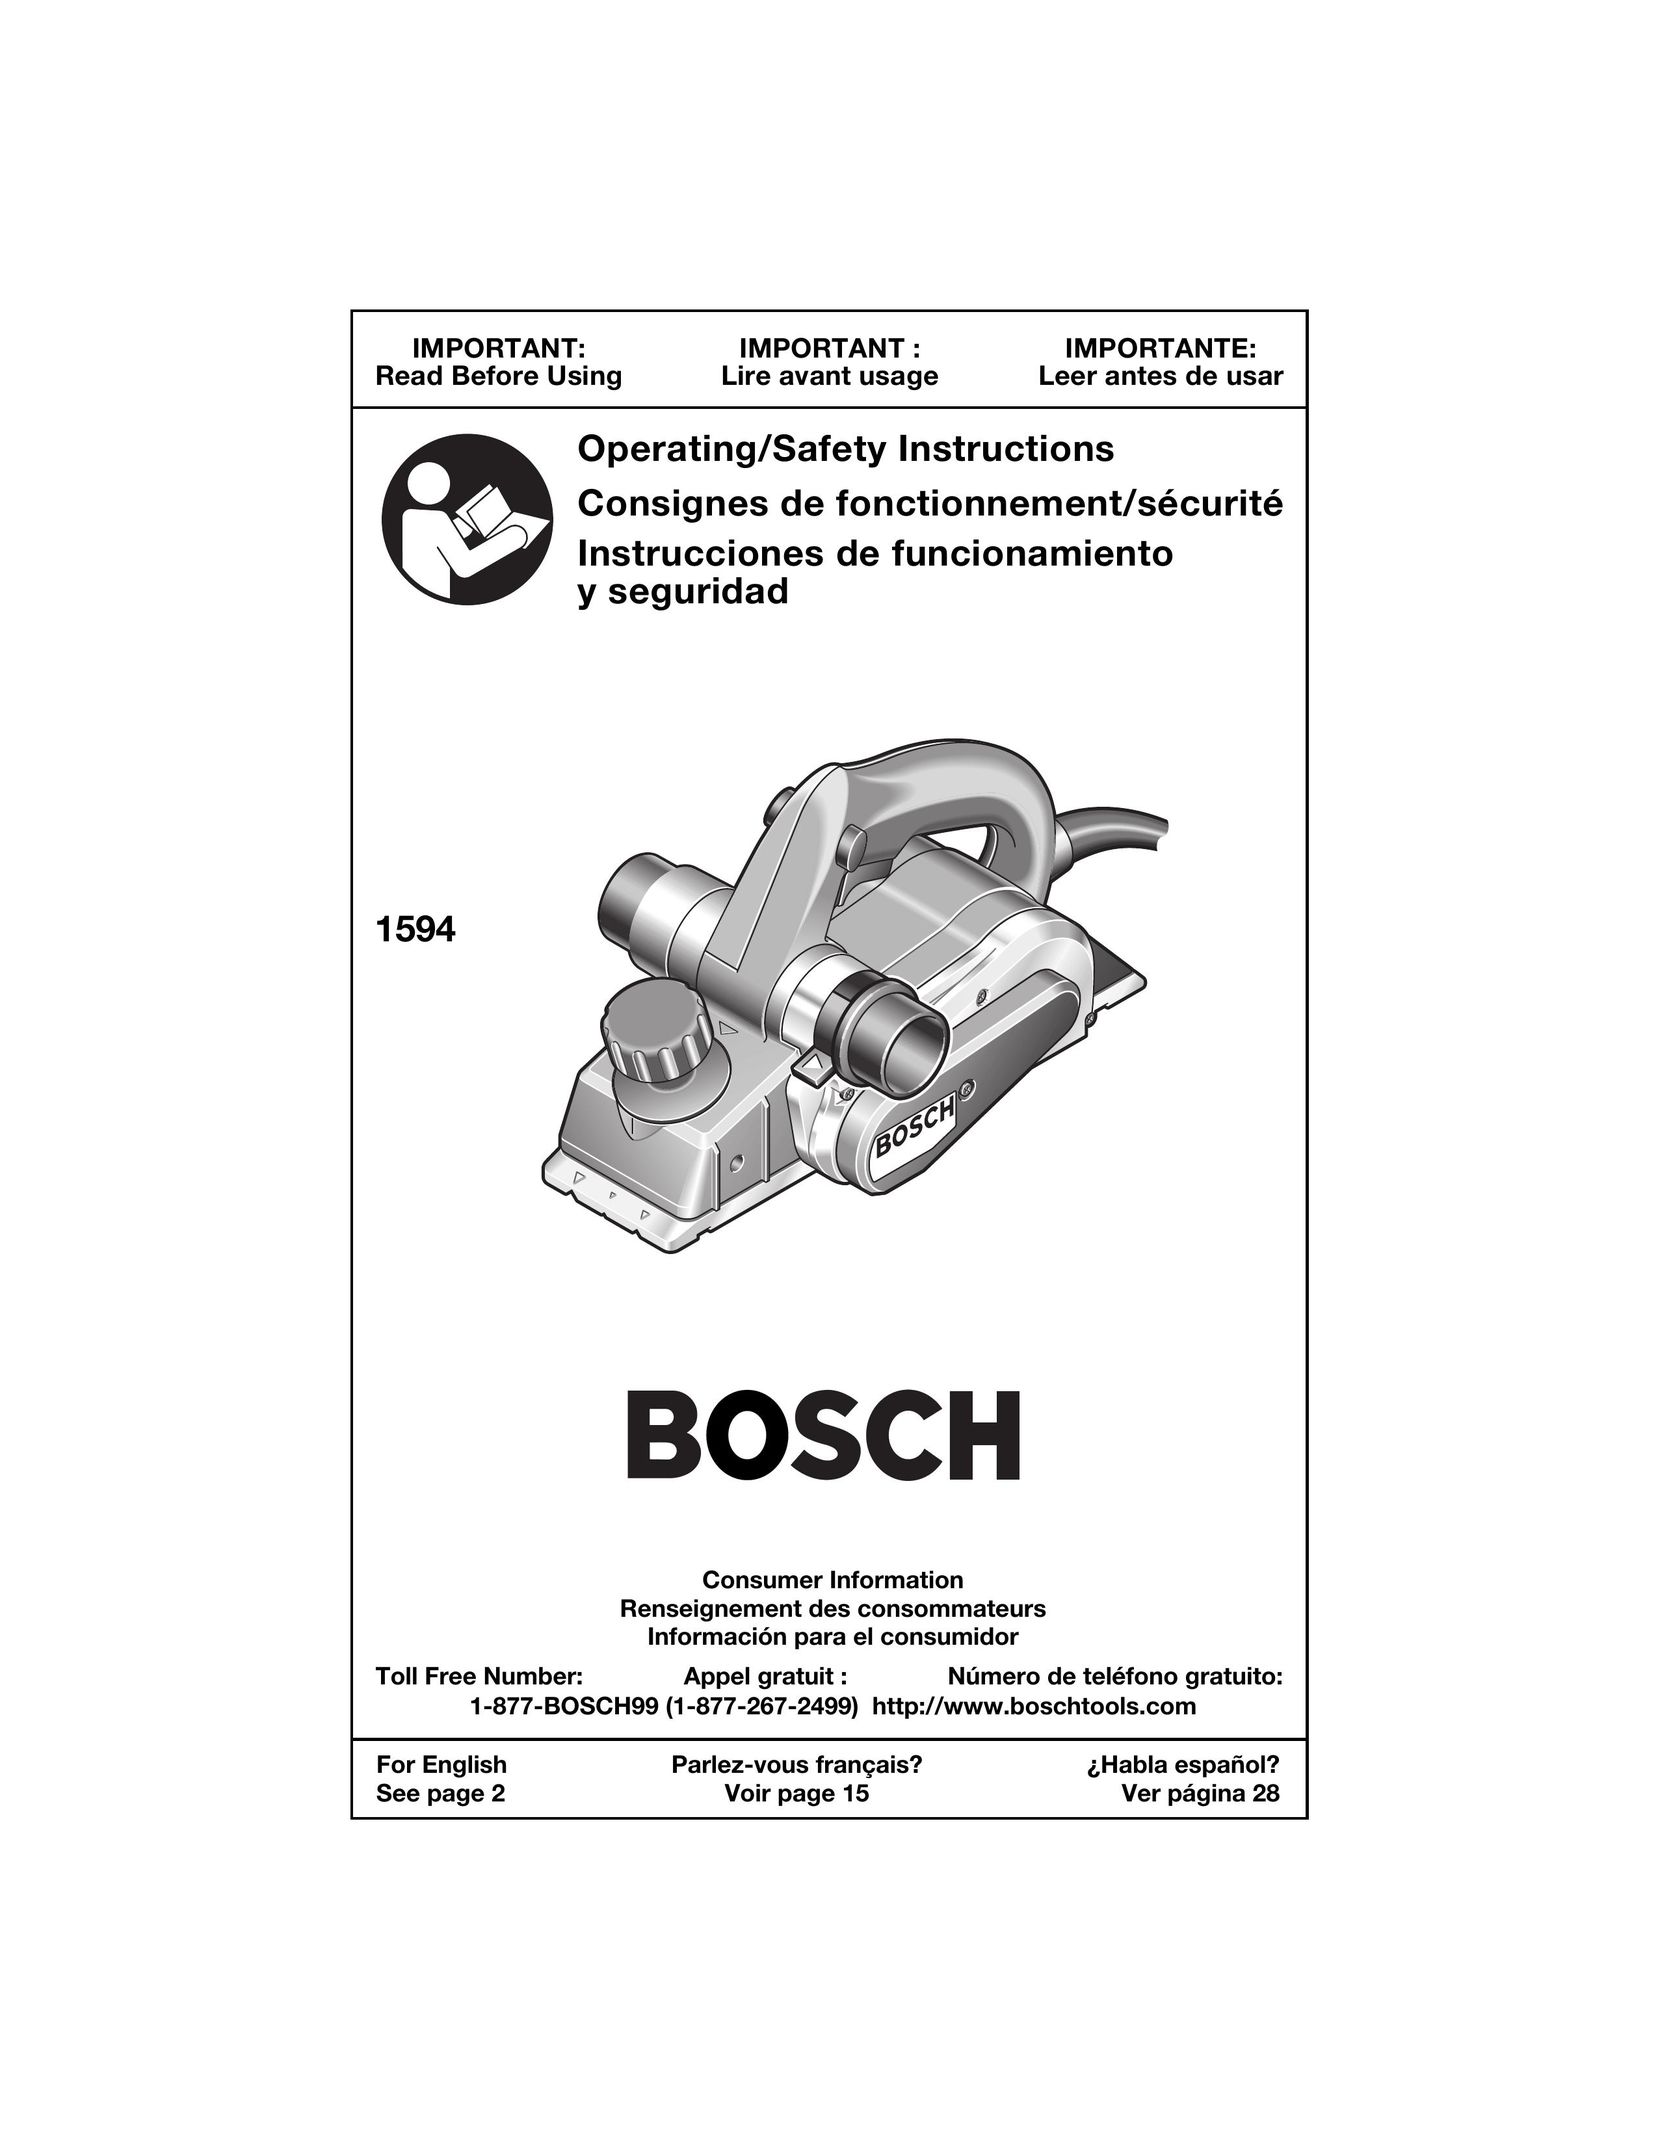 Bosch Appliances 1594 Vacuum Cleaner User Manual